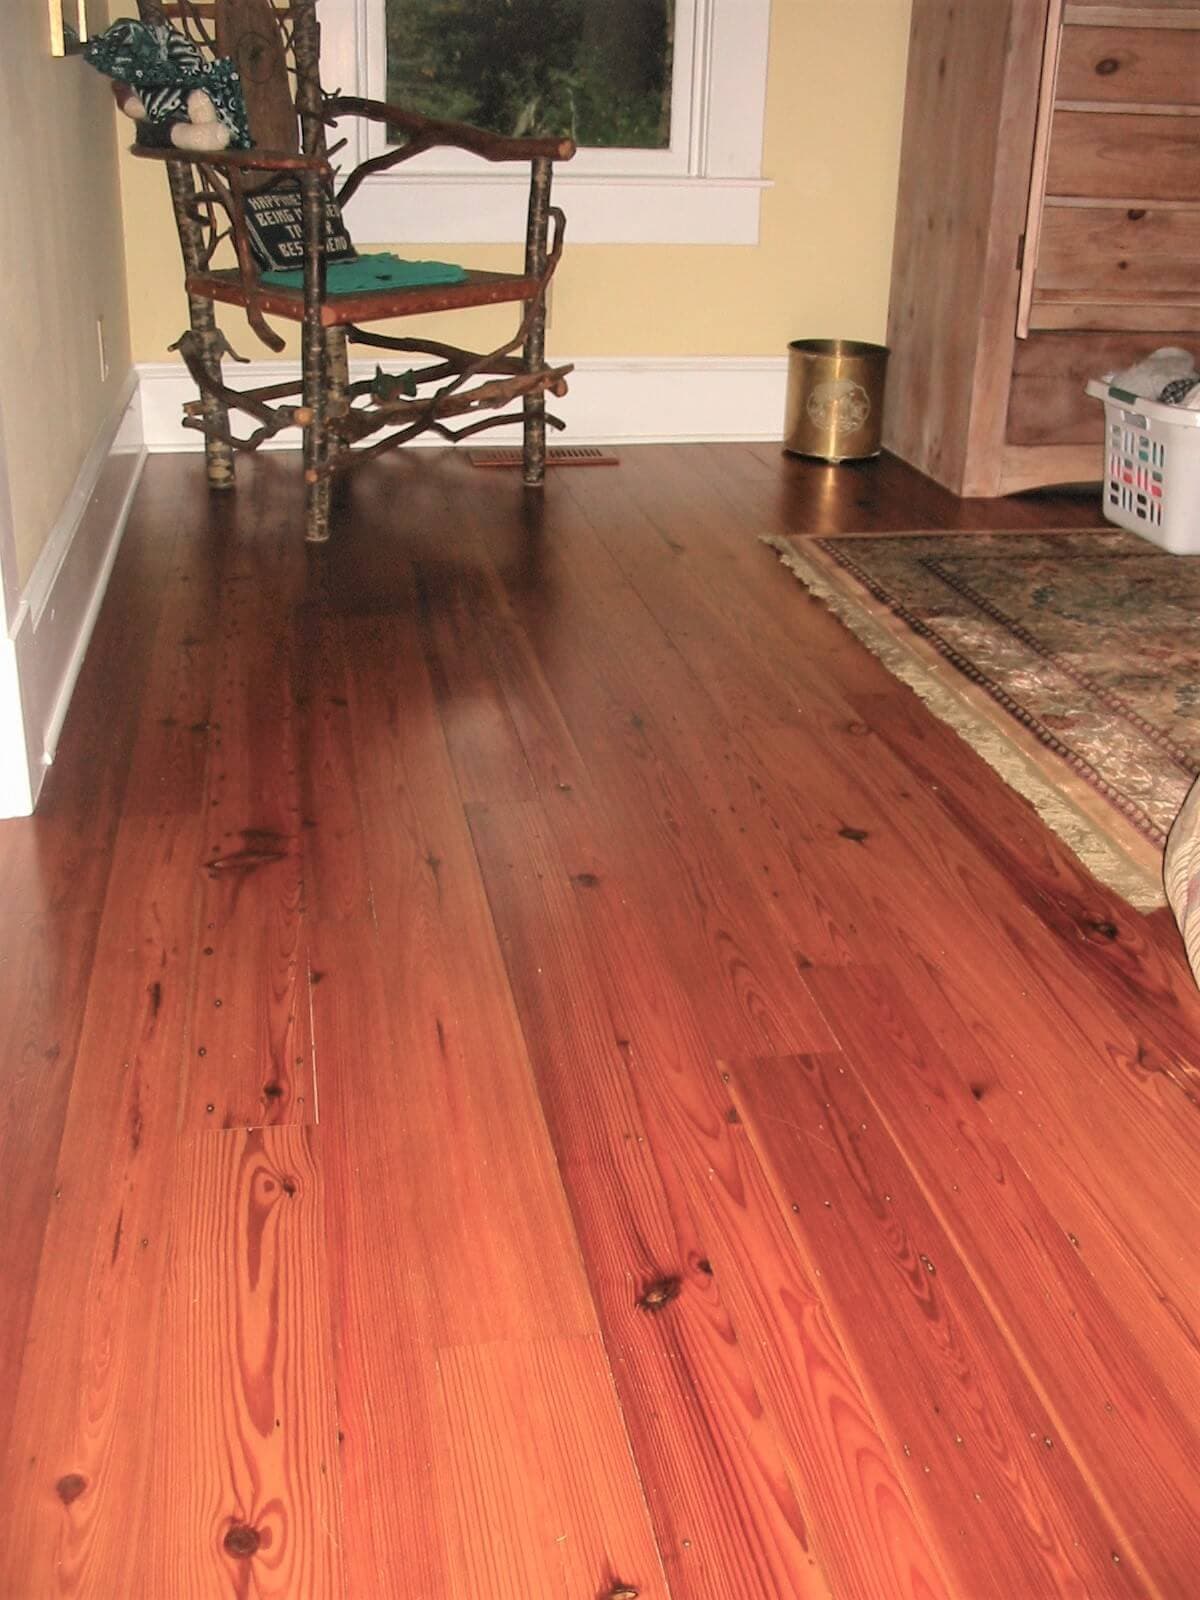 heart pine plain sawn floor near a rug and chair